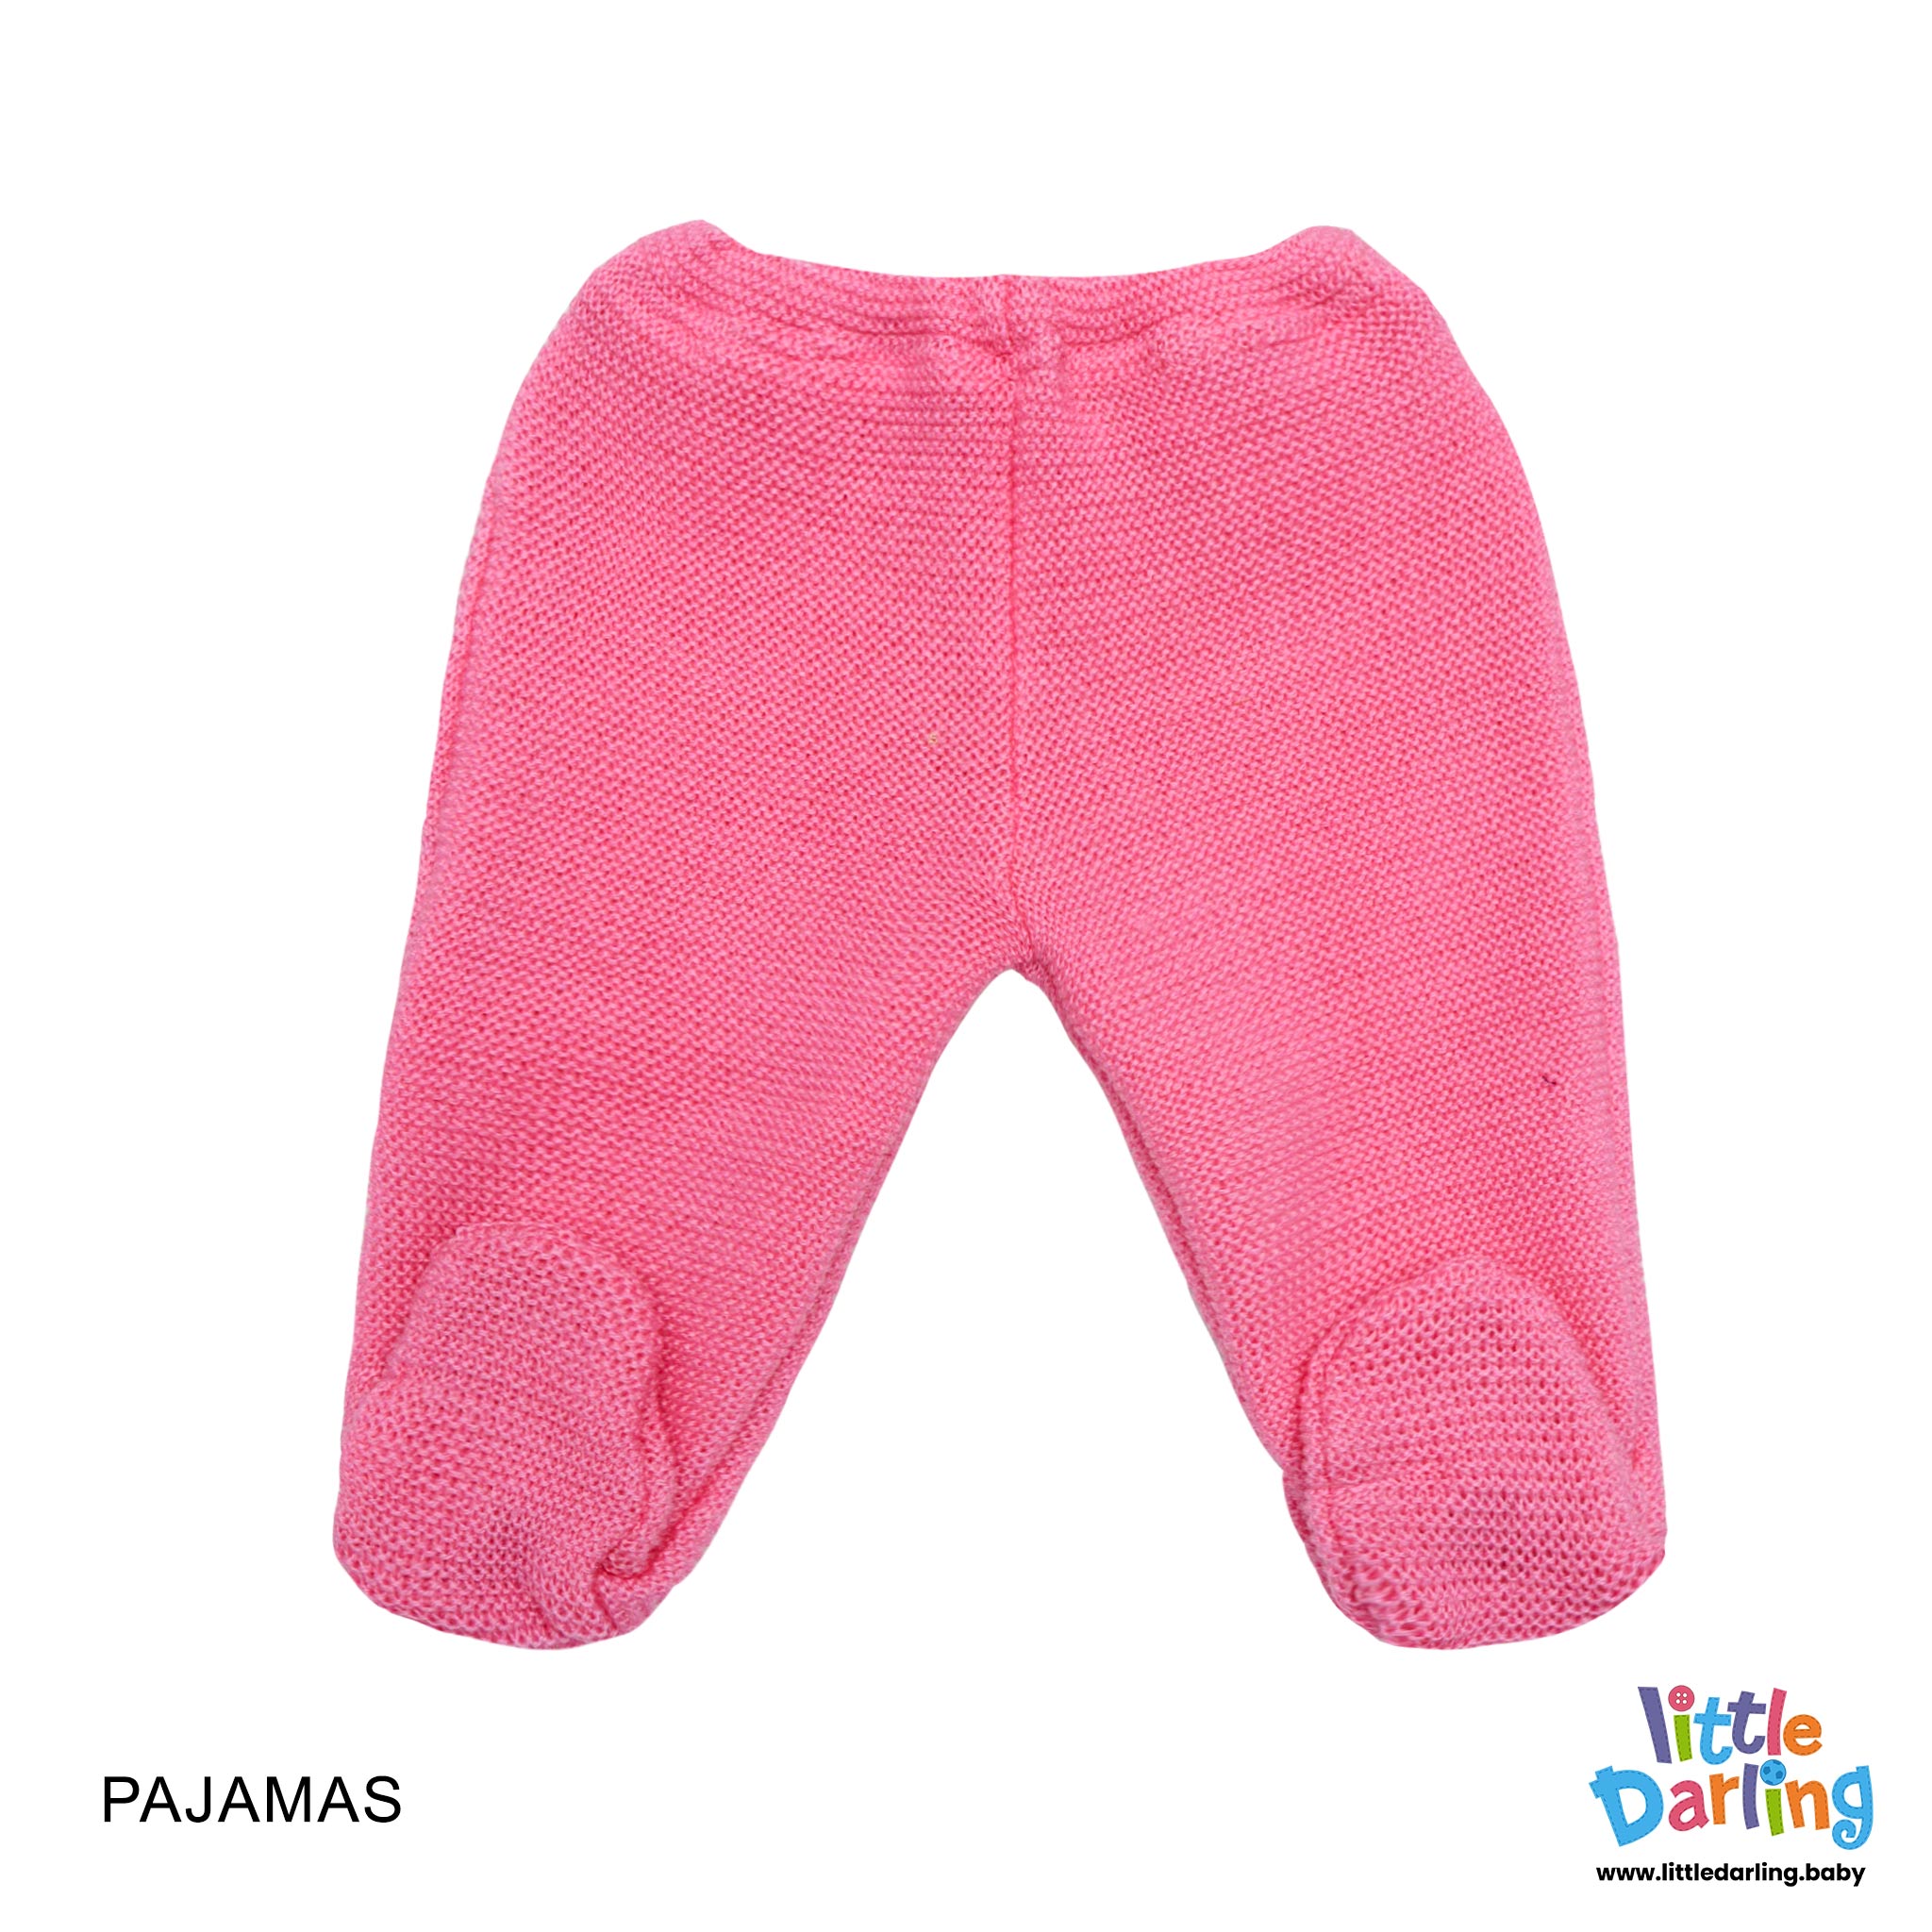 4 Pcs Woolen Gift Set Pink Color by Little Darling